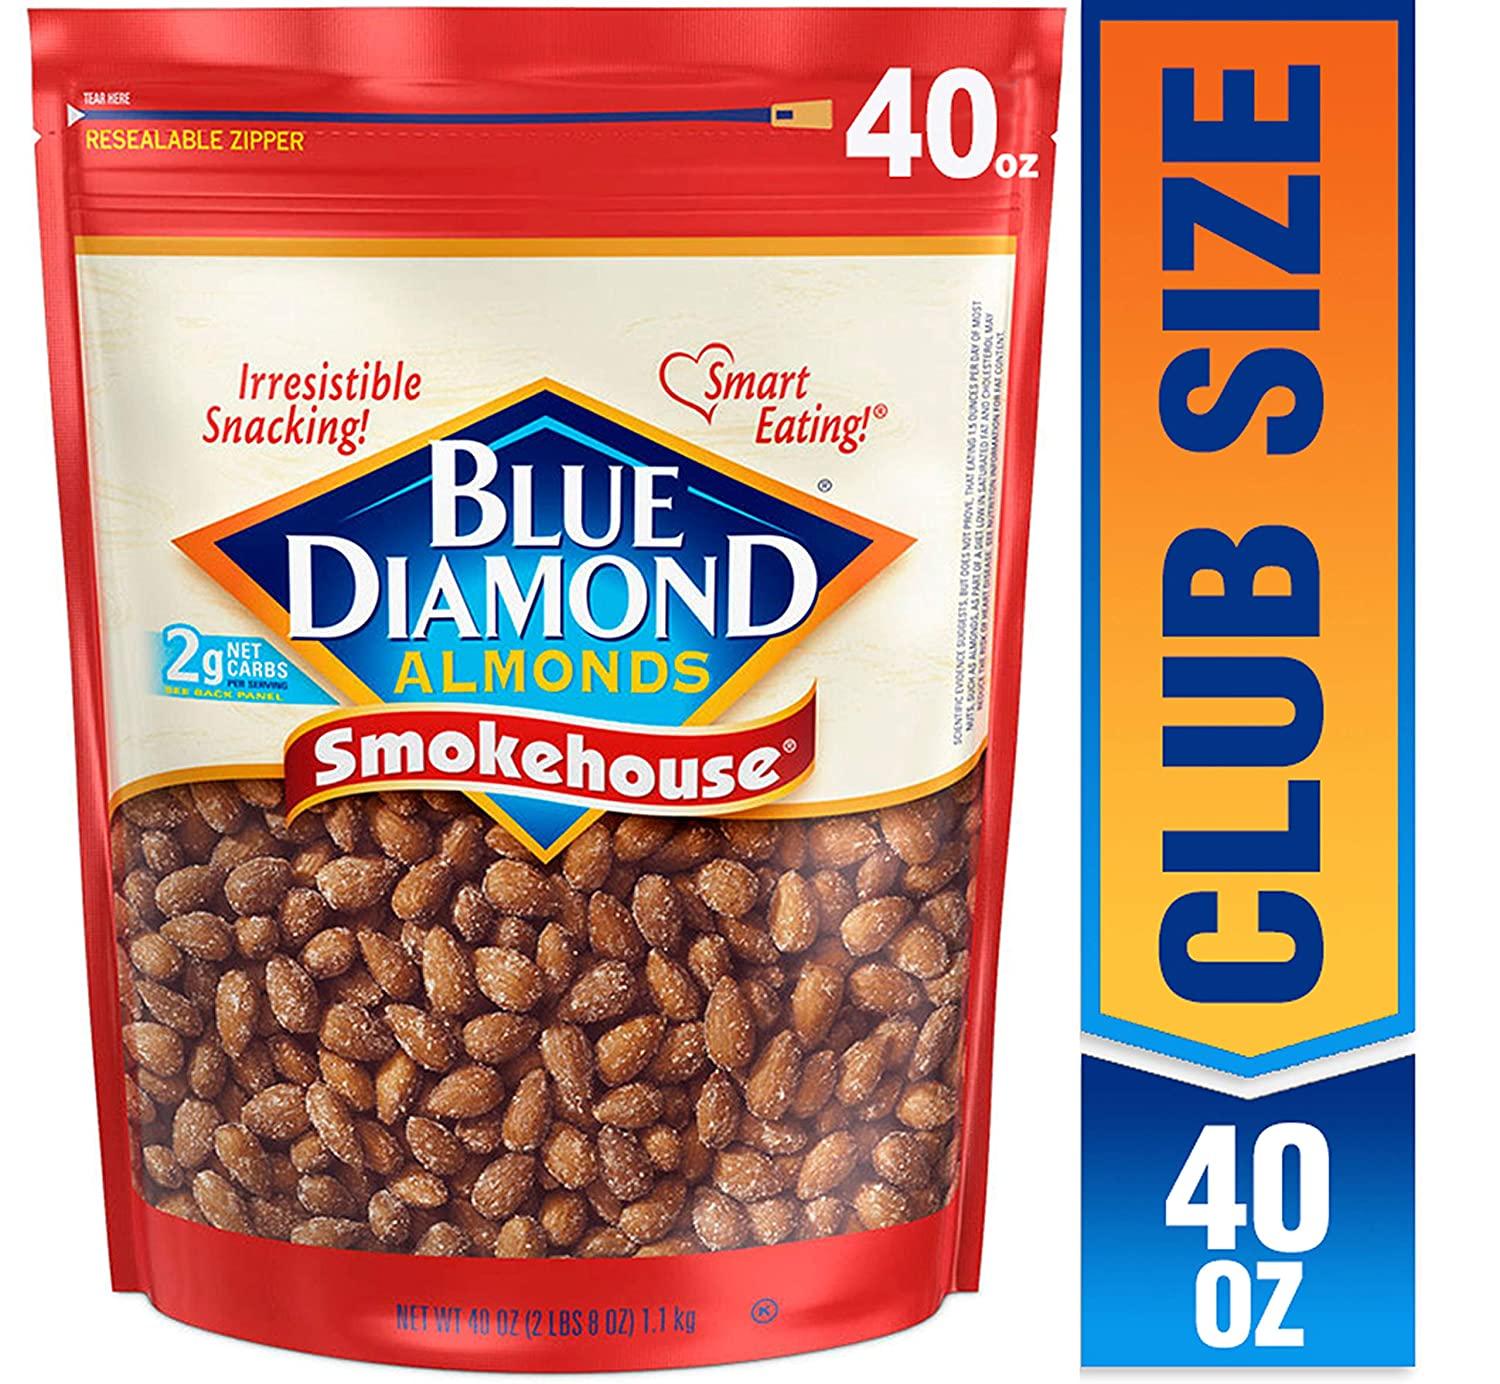 Blue Diamond Smokehouse Almonds for $8.02 Shipped